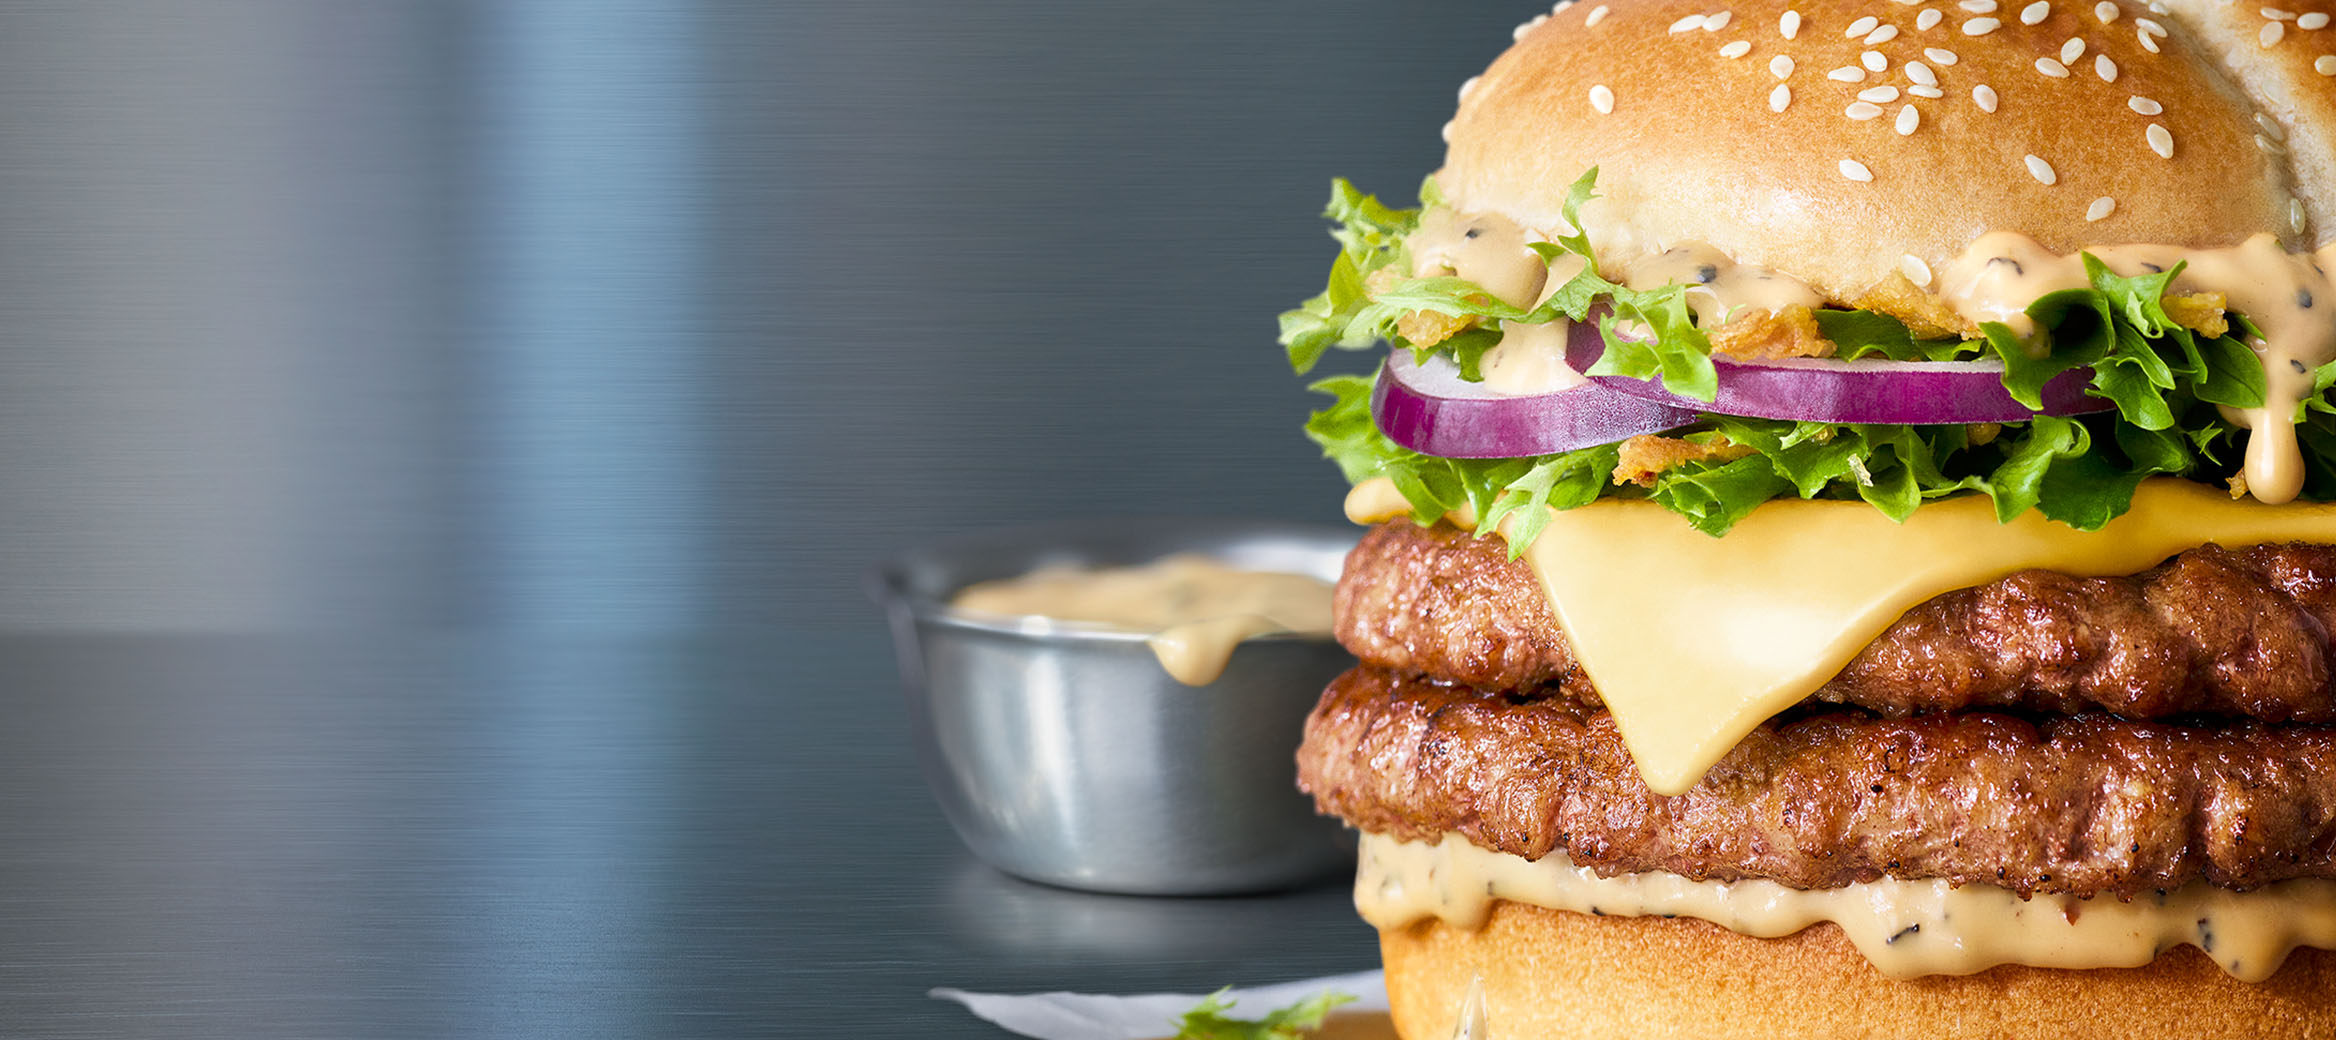 A McDonald’s burger on a metallic background.